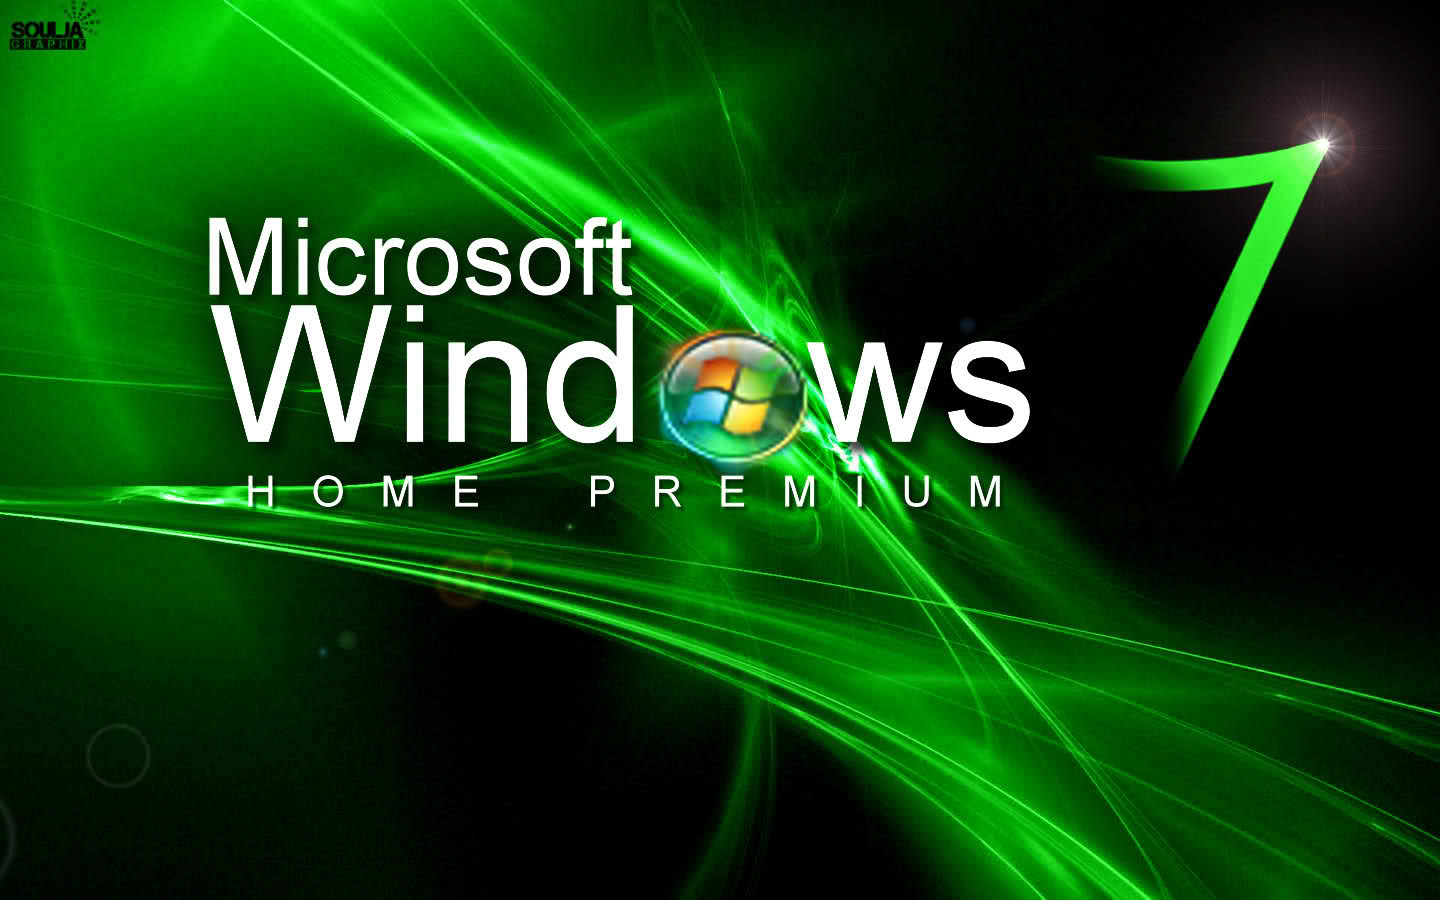 Custom Windows 7 Wallpapers - - Windows 7 Help Forums